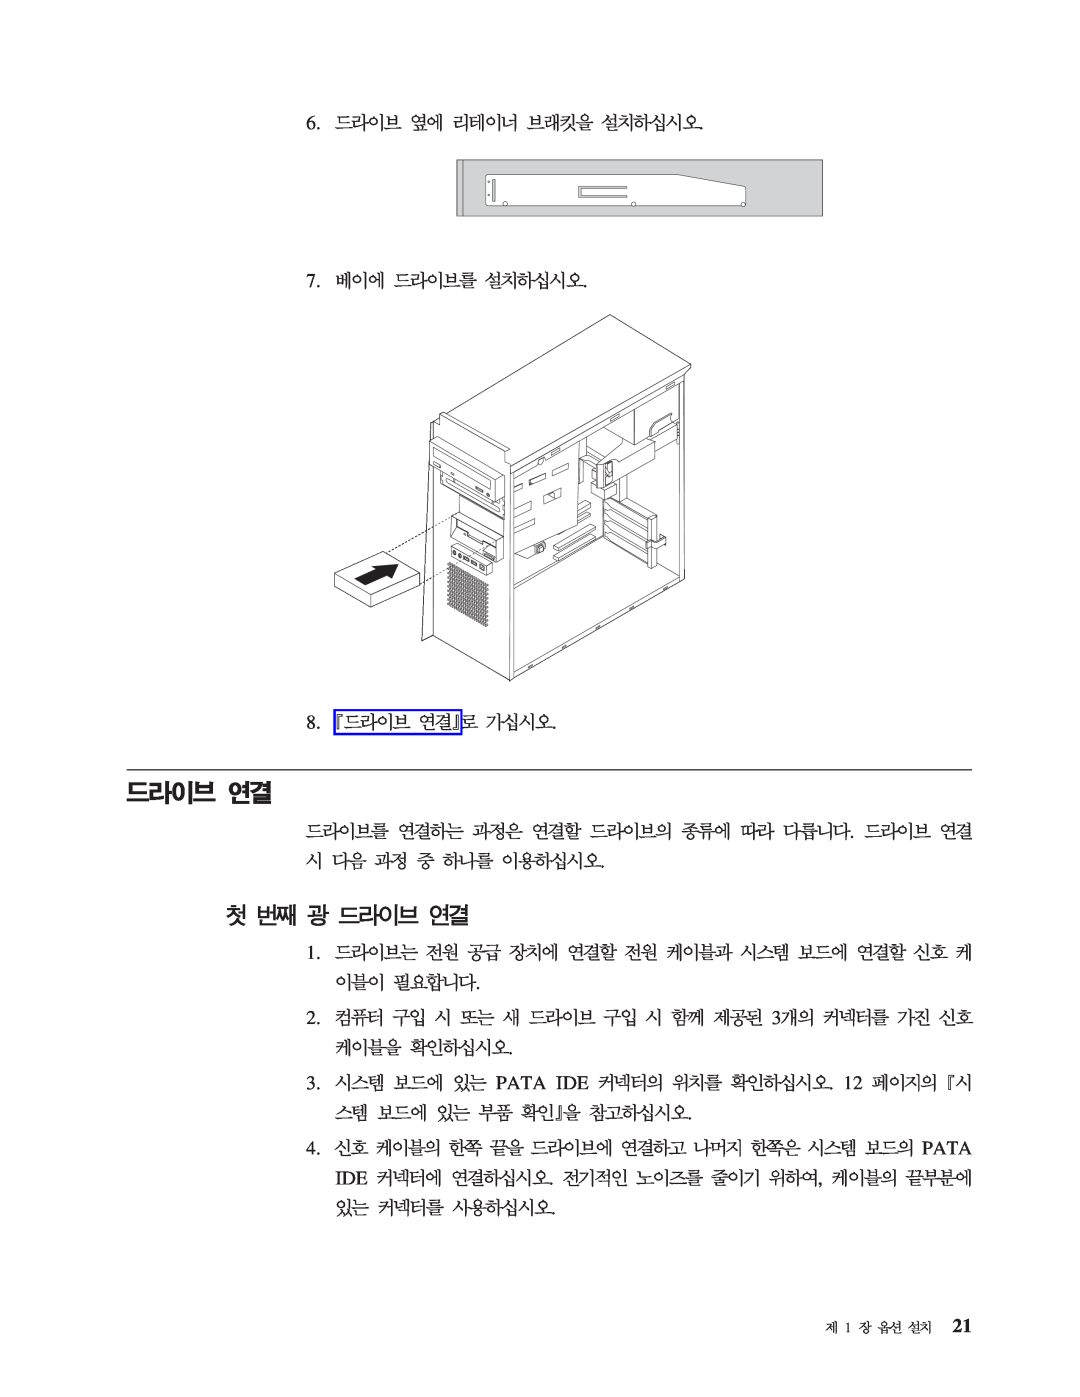 IBM 8143 manual Pata Ide 